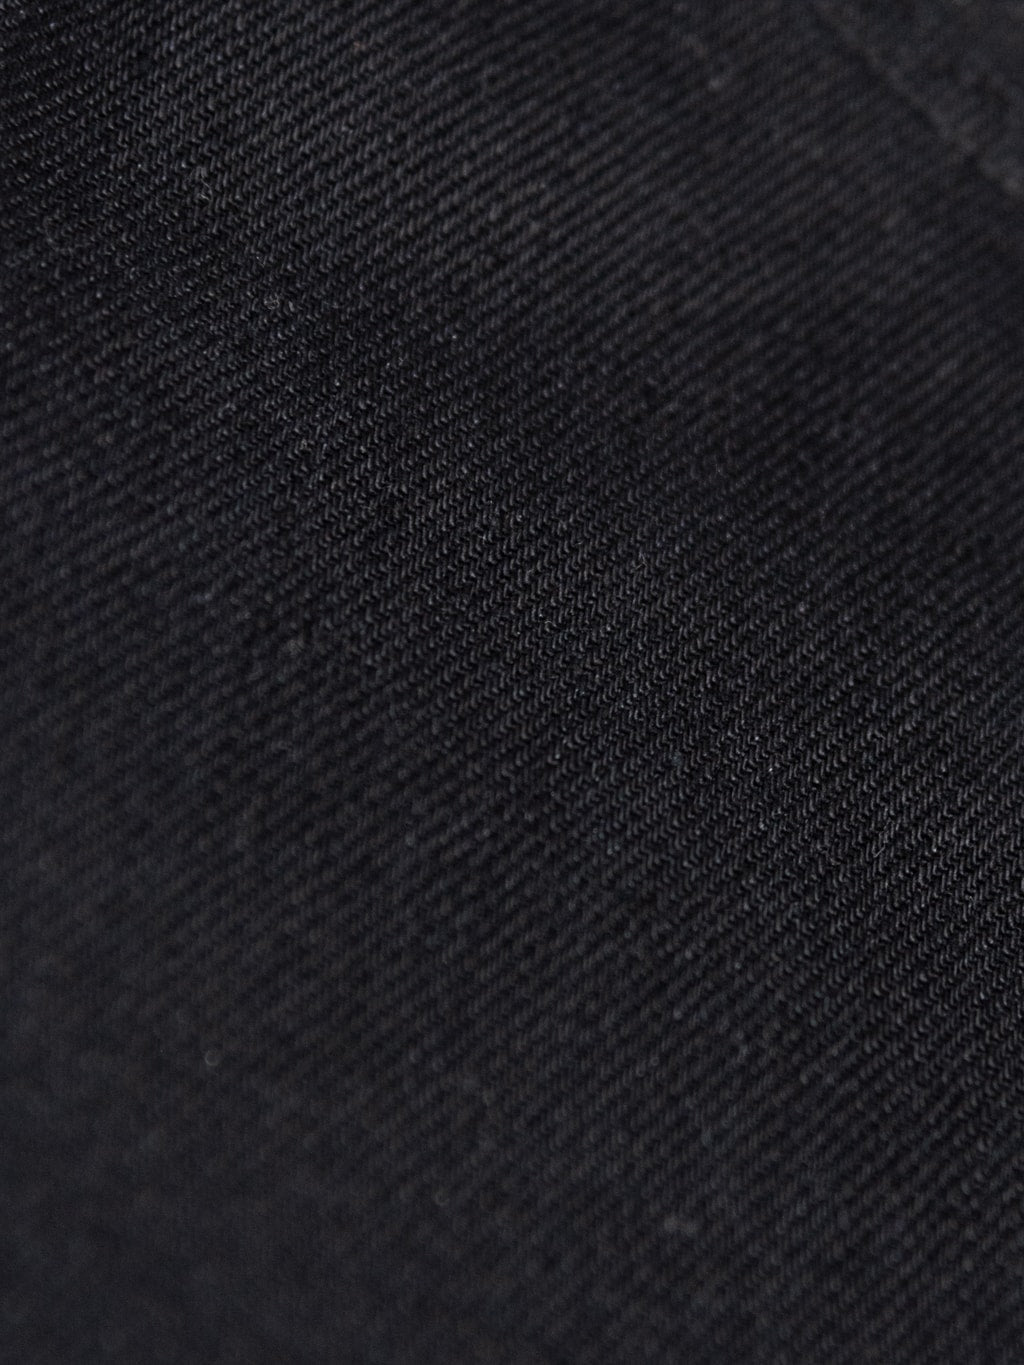 Stevenson Overall Big Sur 210 Slim Tapered jeans solid black denim fabric